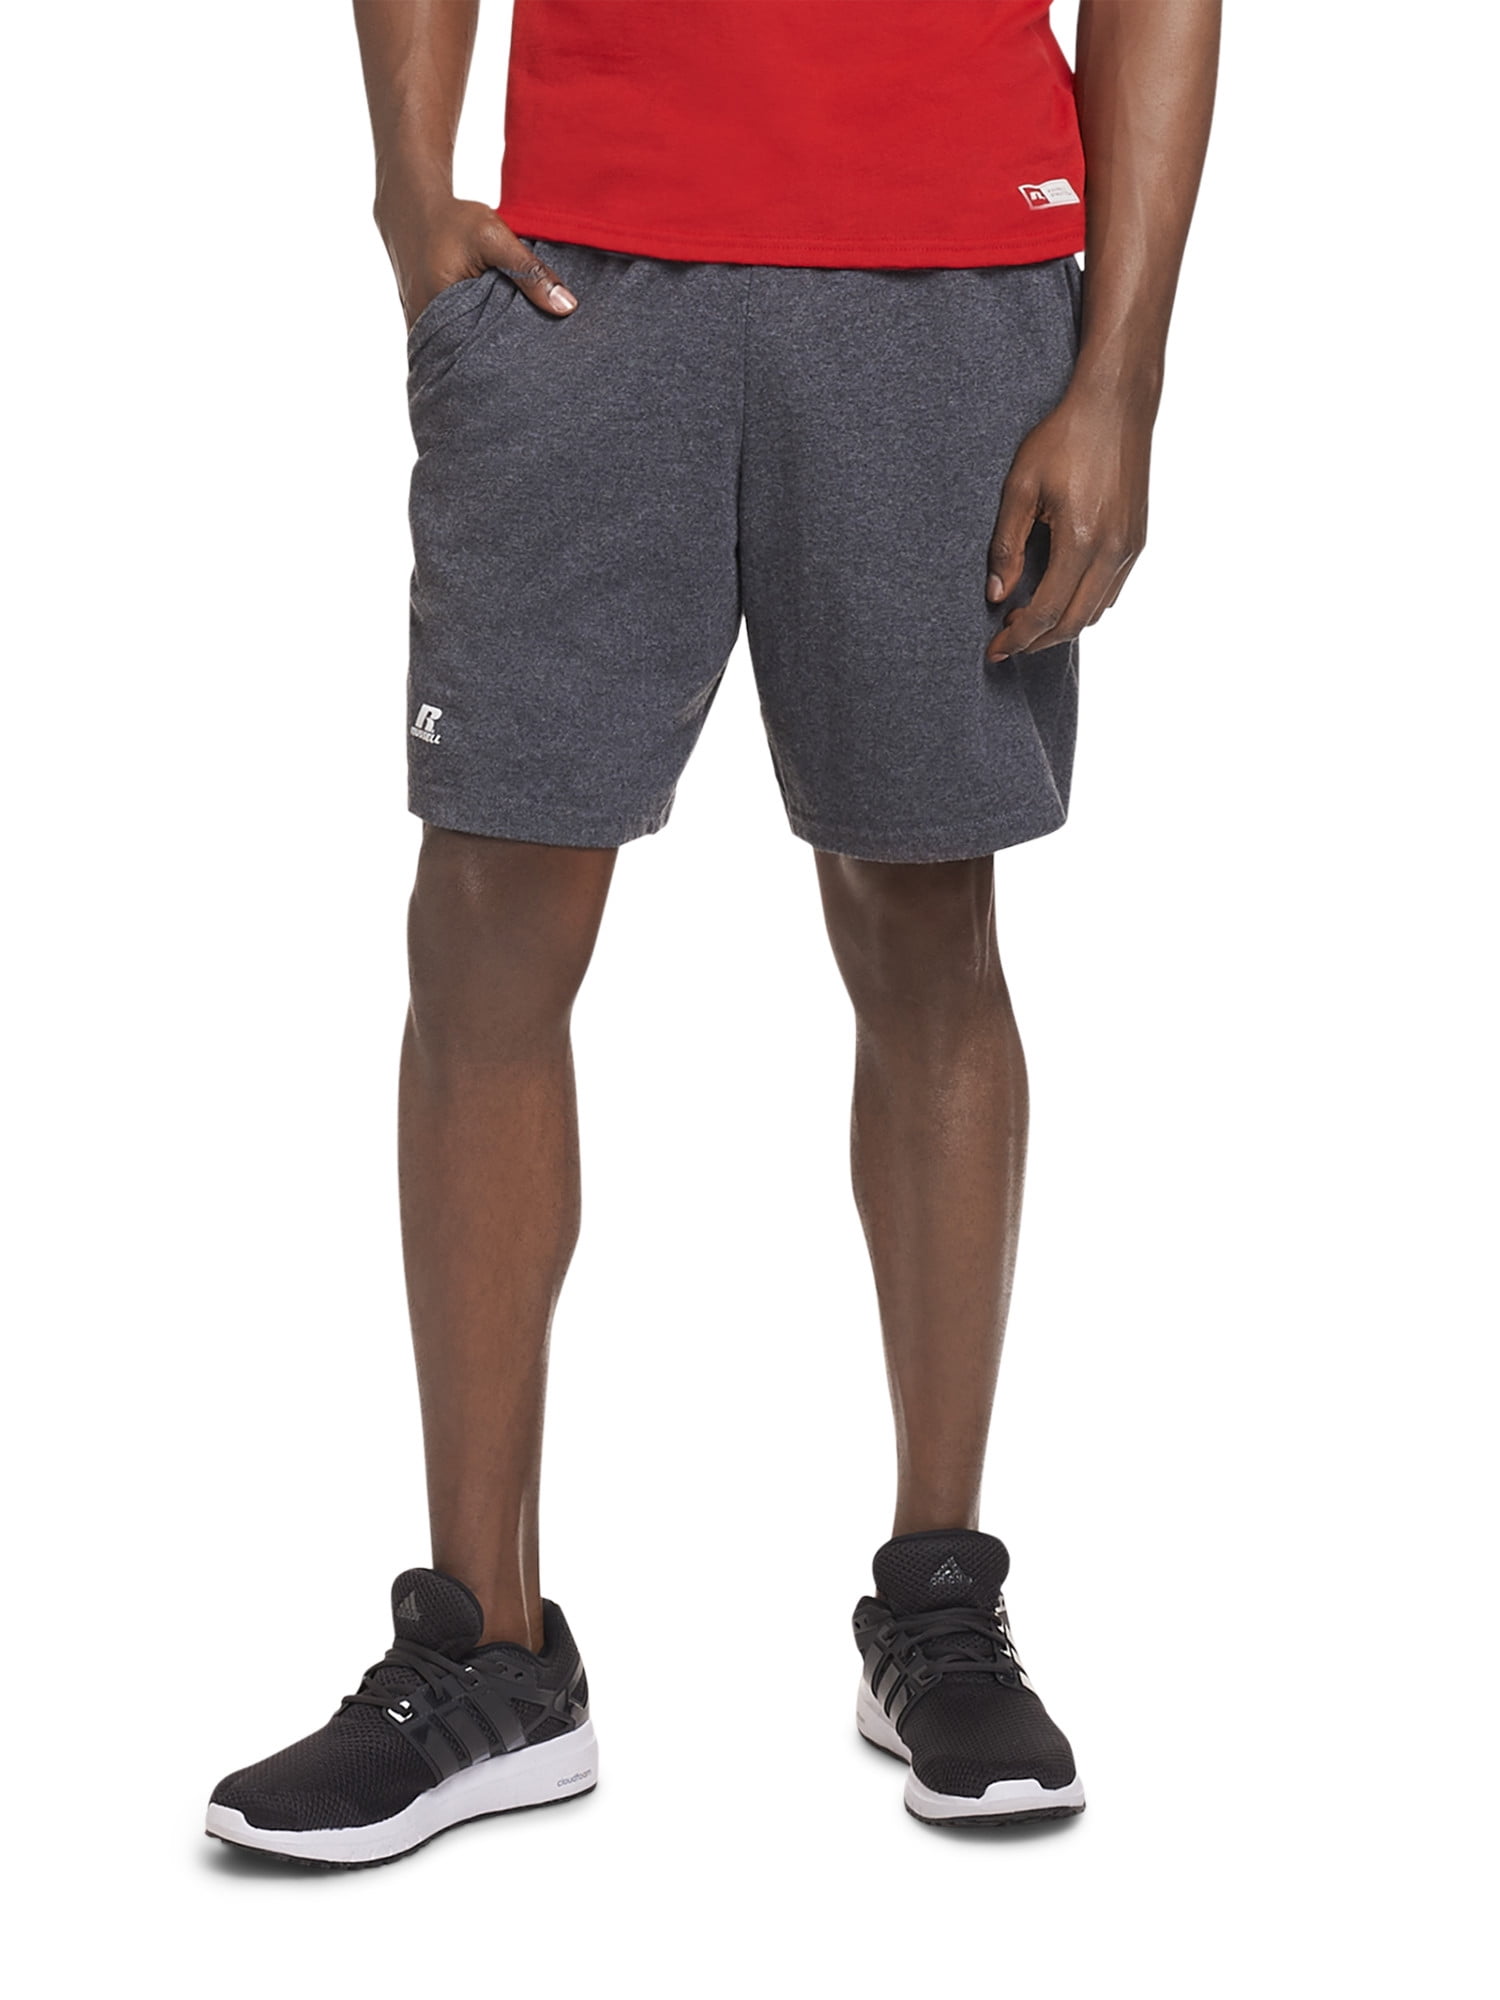 Hanes Sport Men Mesh Shorts with Pockets Gym Workout 9" inseam sz S-2XL 4 Colors 